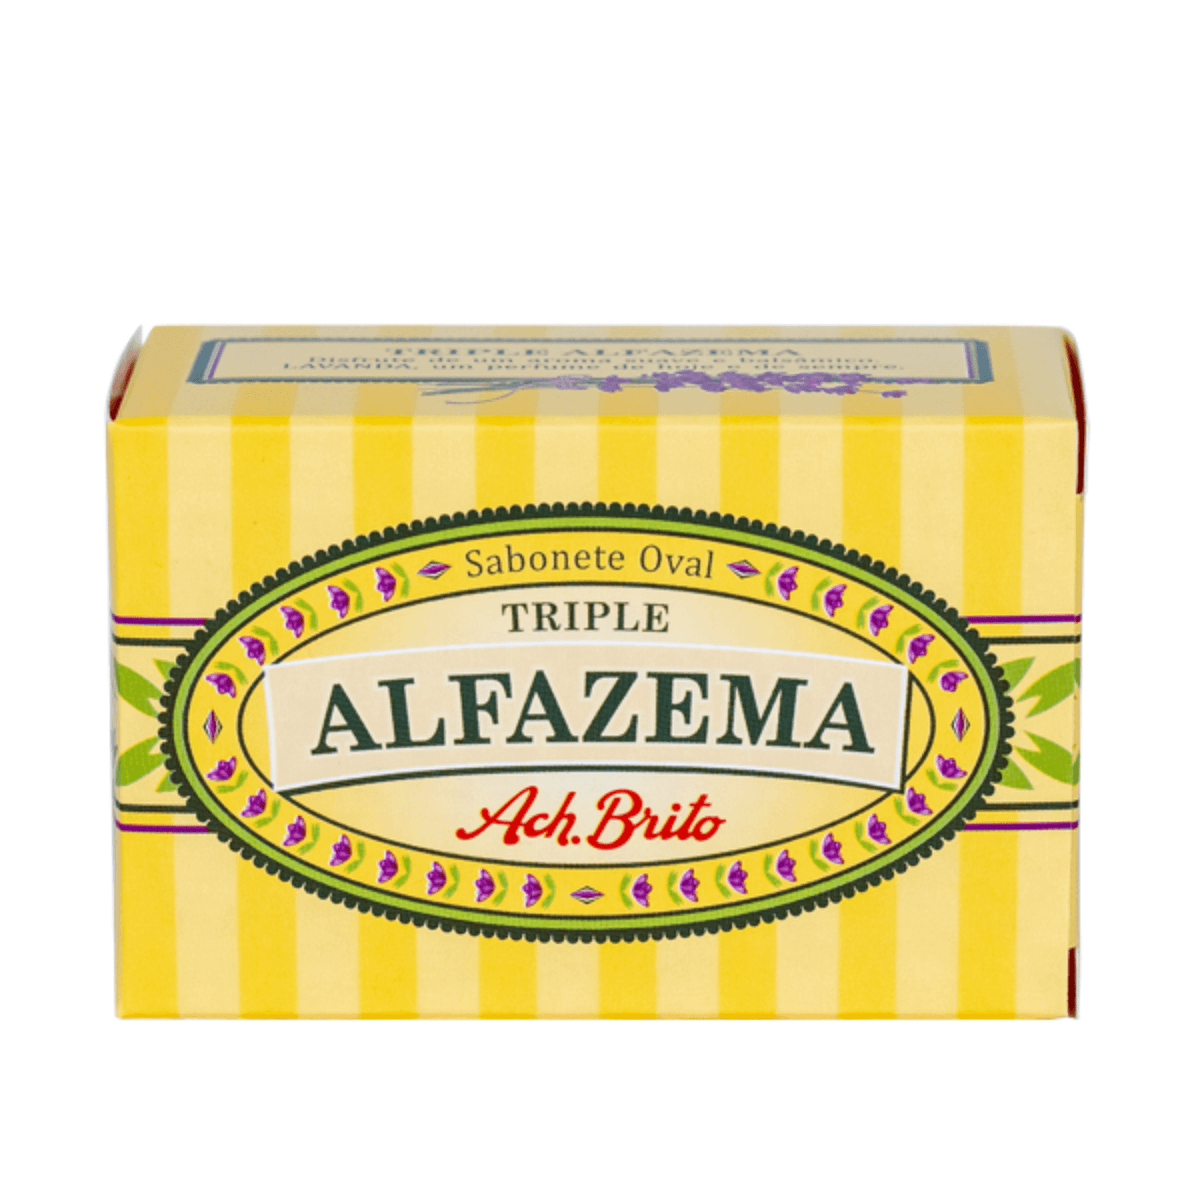 Primary Image of Alfazema (Lavender) Soap